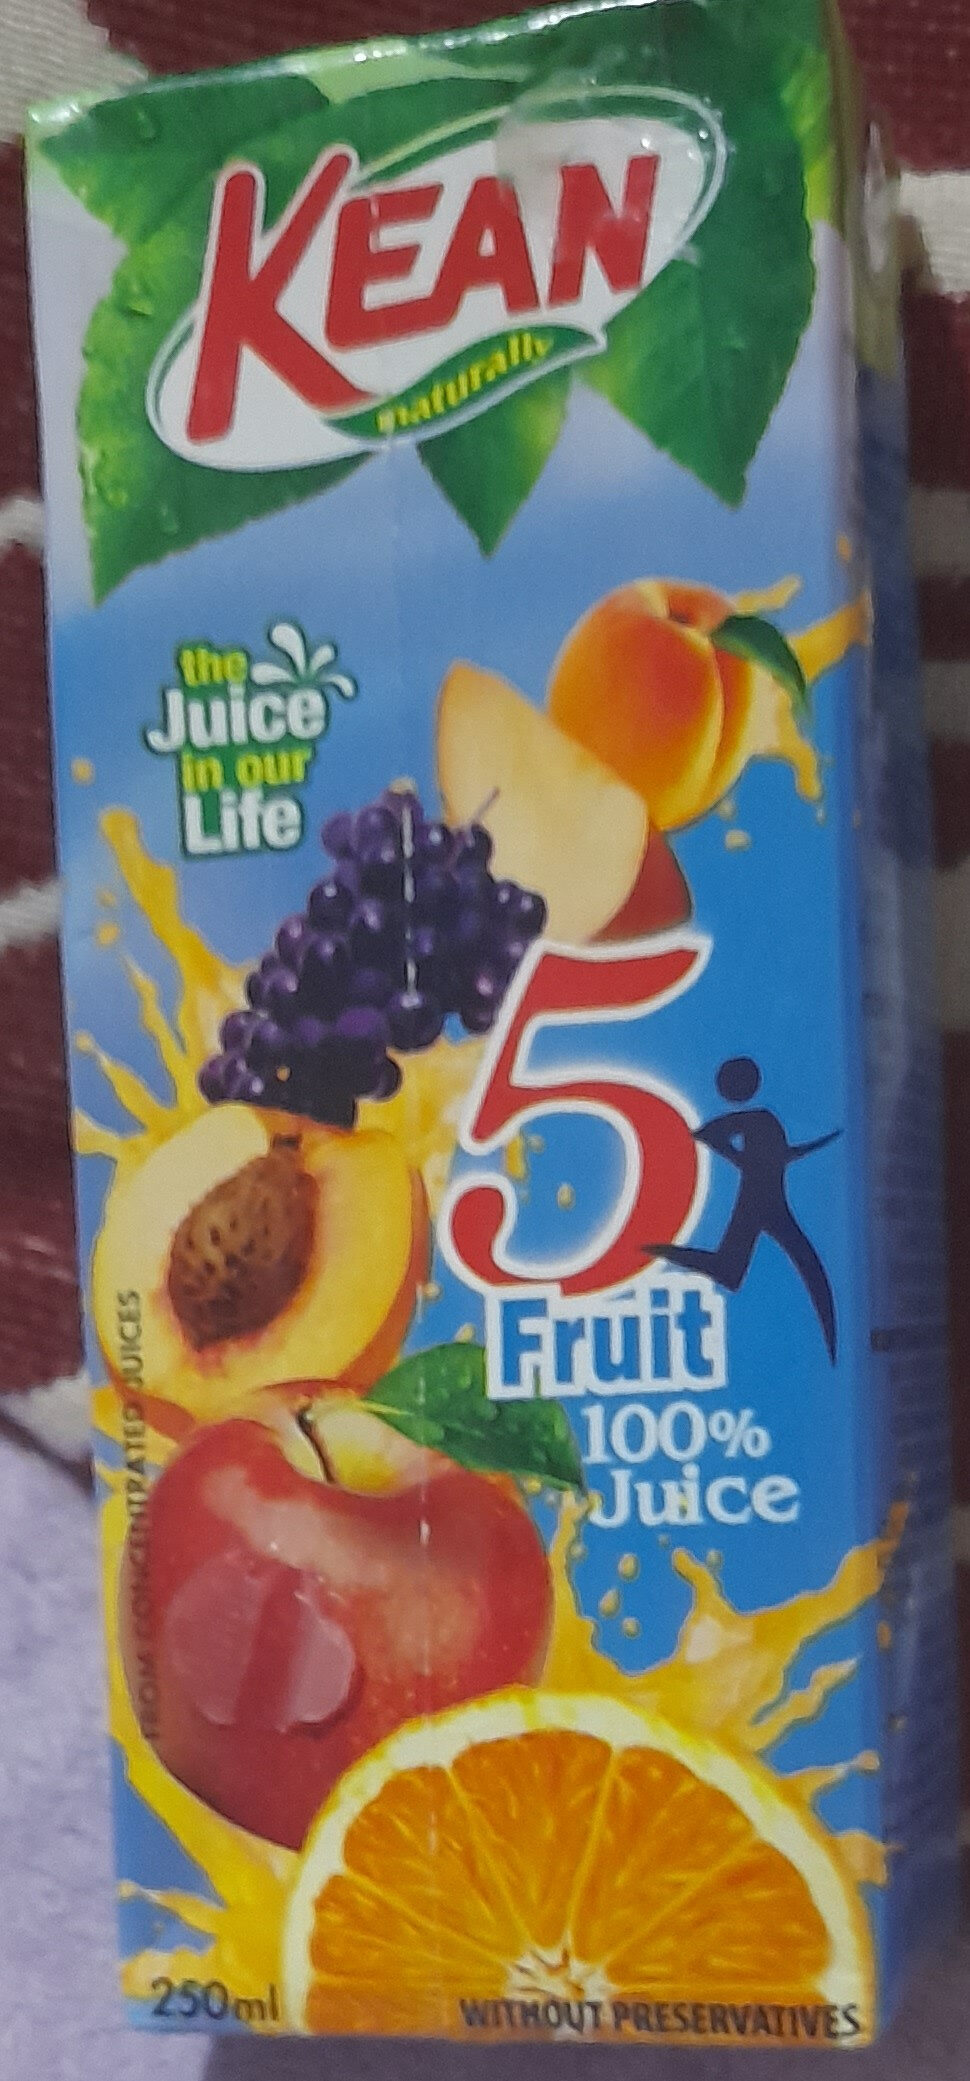 Kean juice 5 fruits - Ürün - en